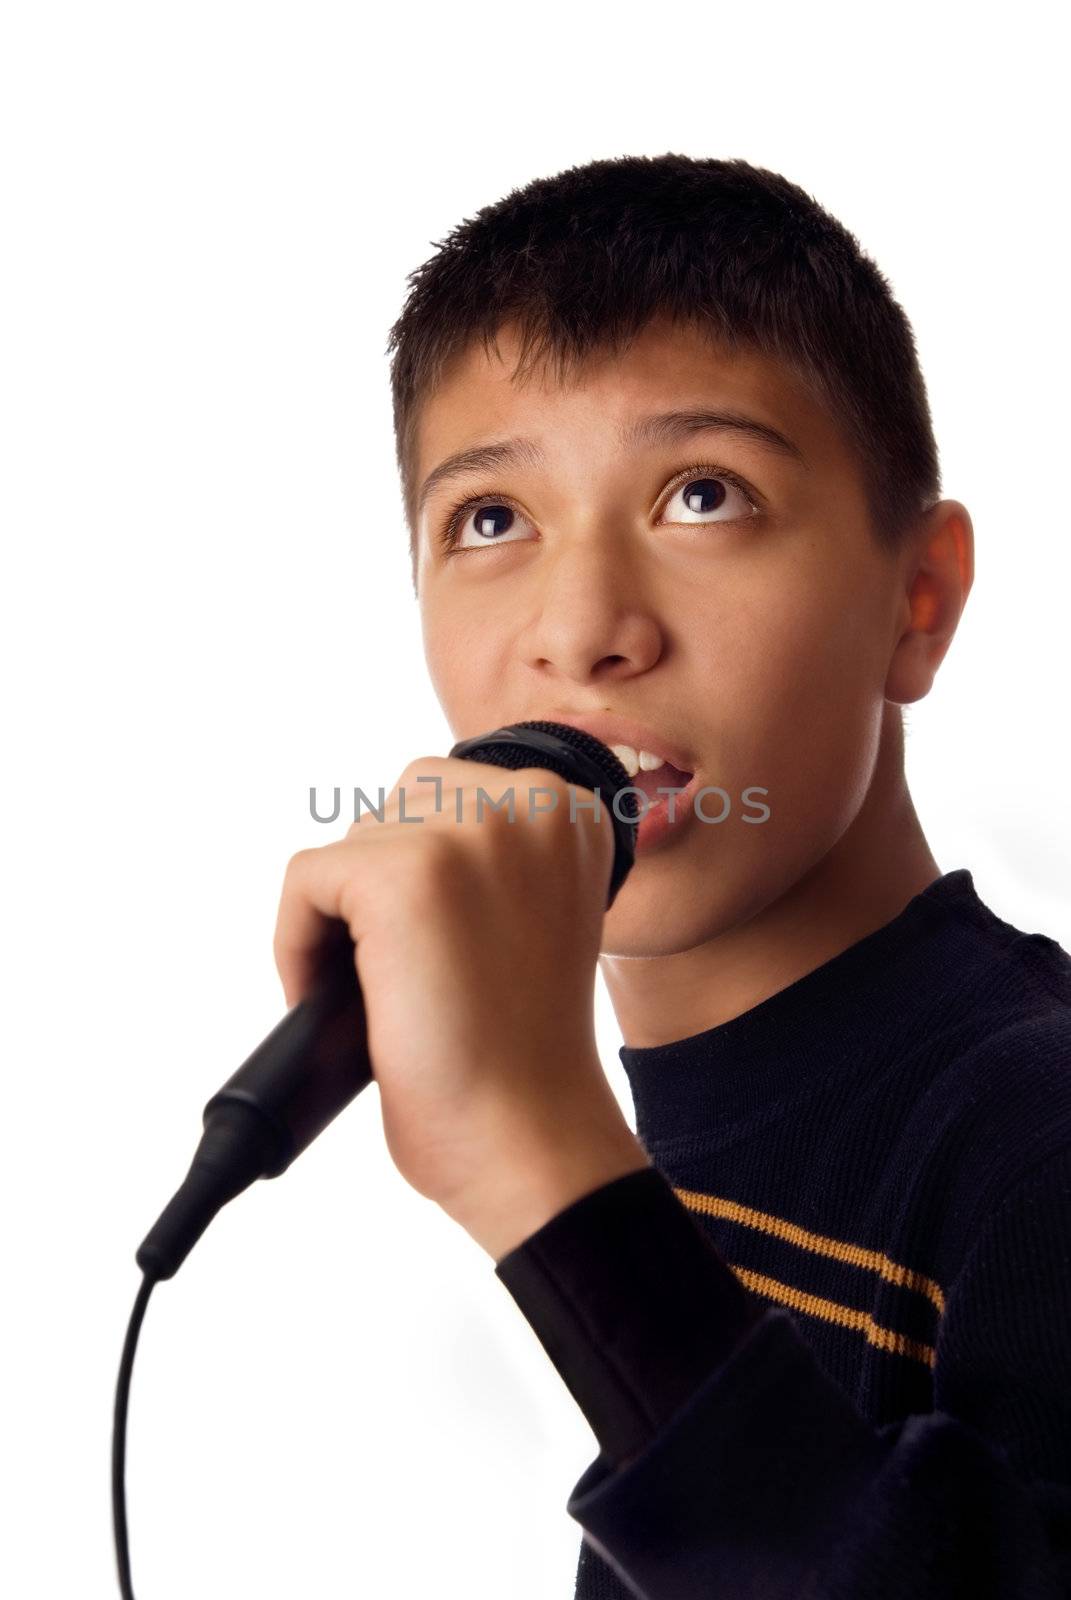 Photo of young boy singing a karaoke song